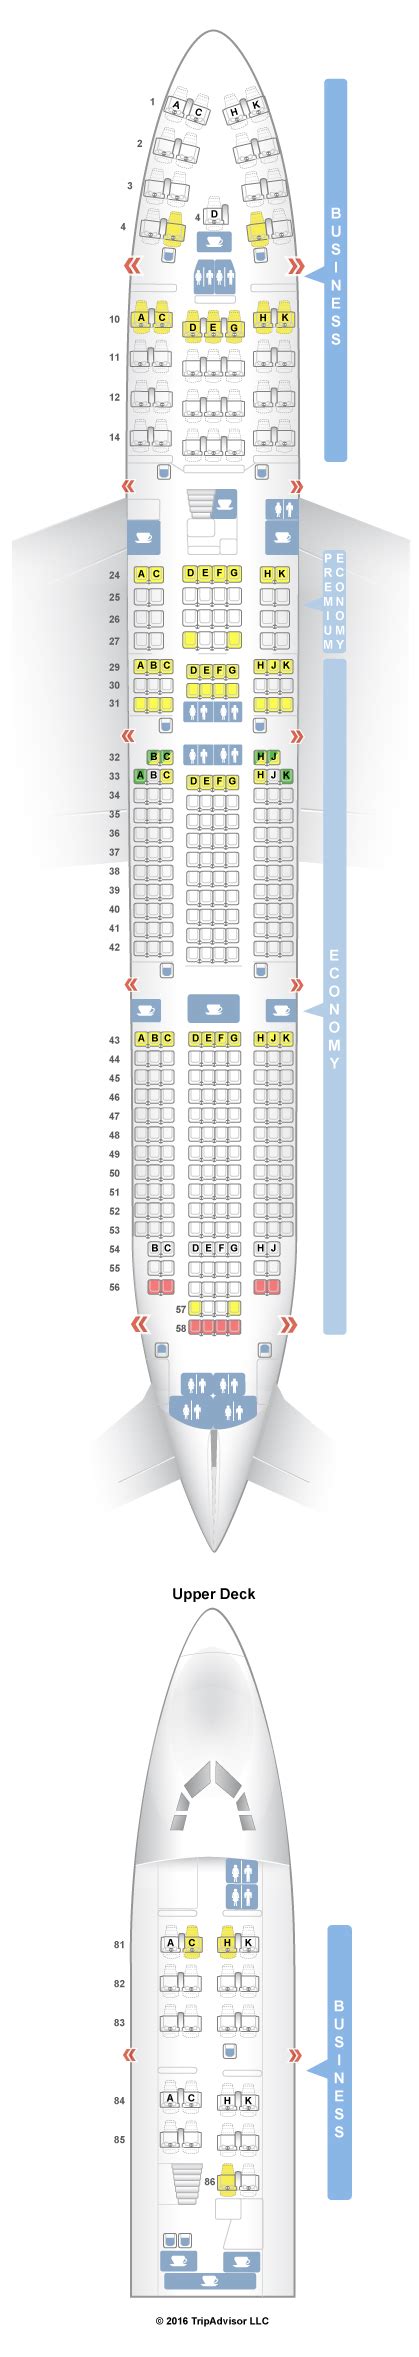 Seatguru Seat Map Lufthansa Boeing V Hot Sex Picture